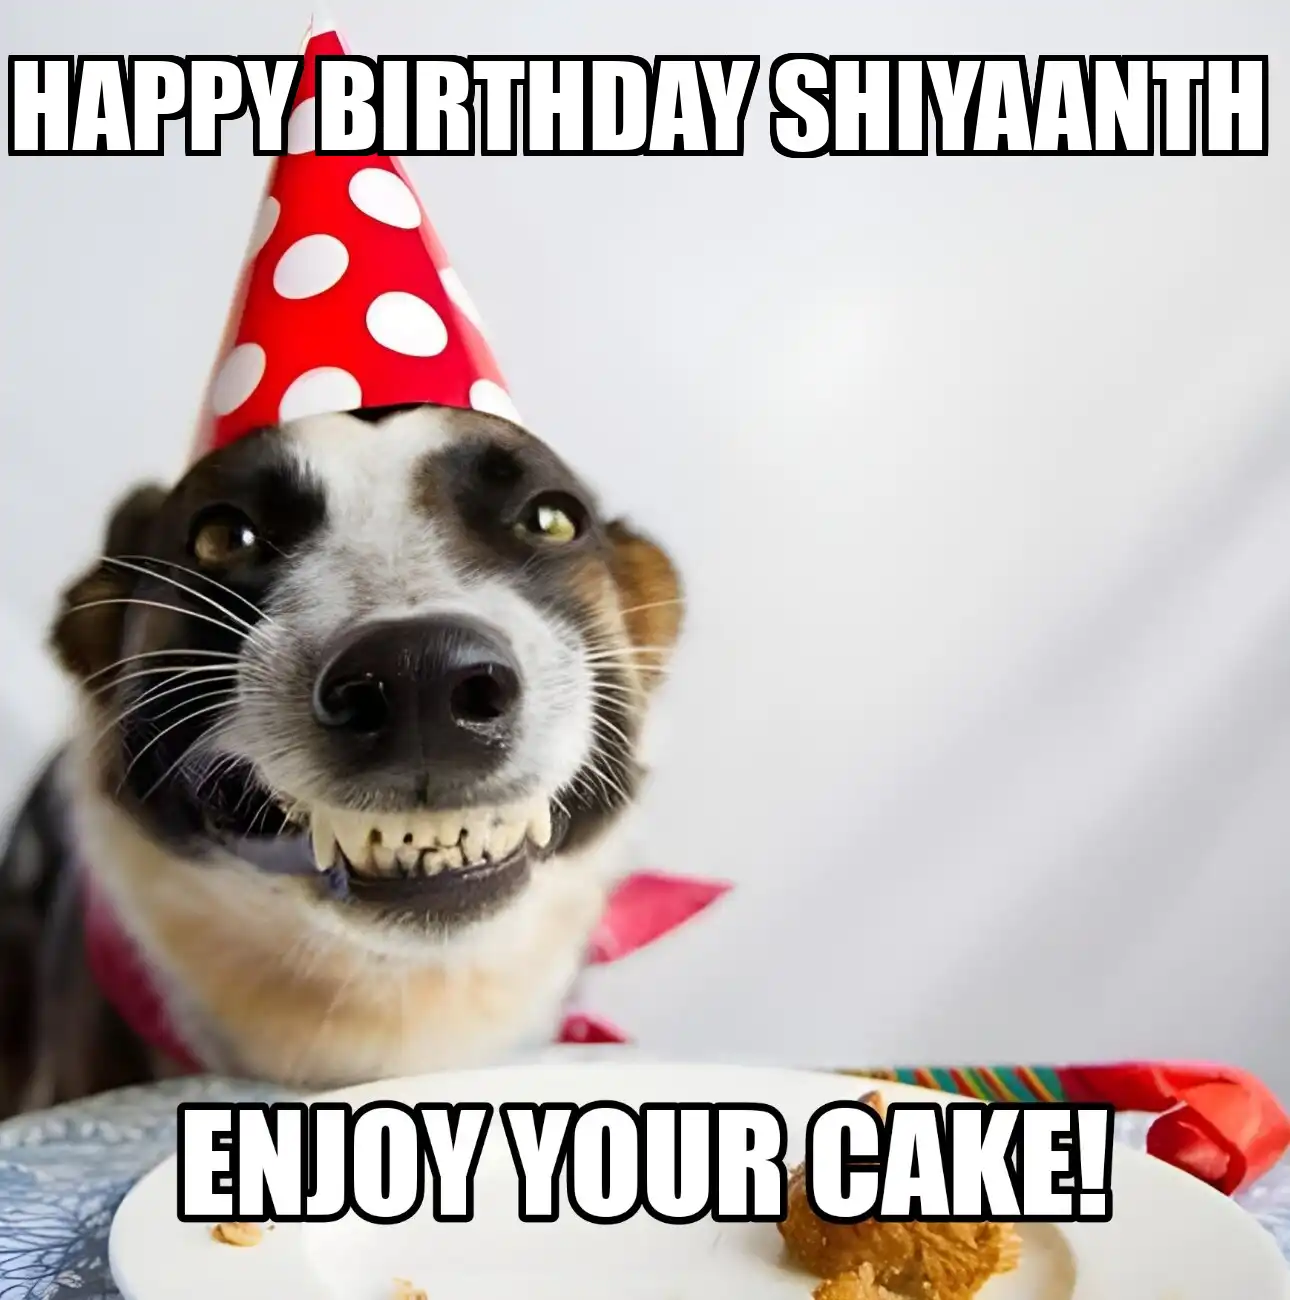 Happy Birthday Shiyaanth Enjoy Your Cake Dog Meme